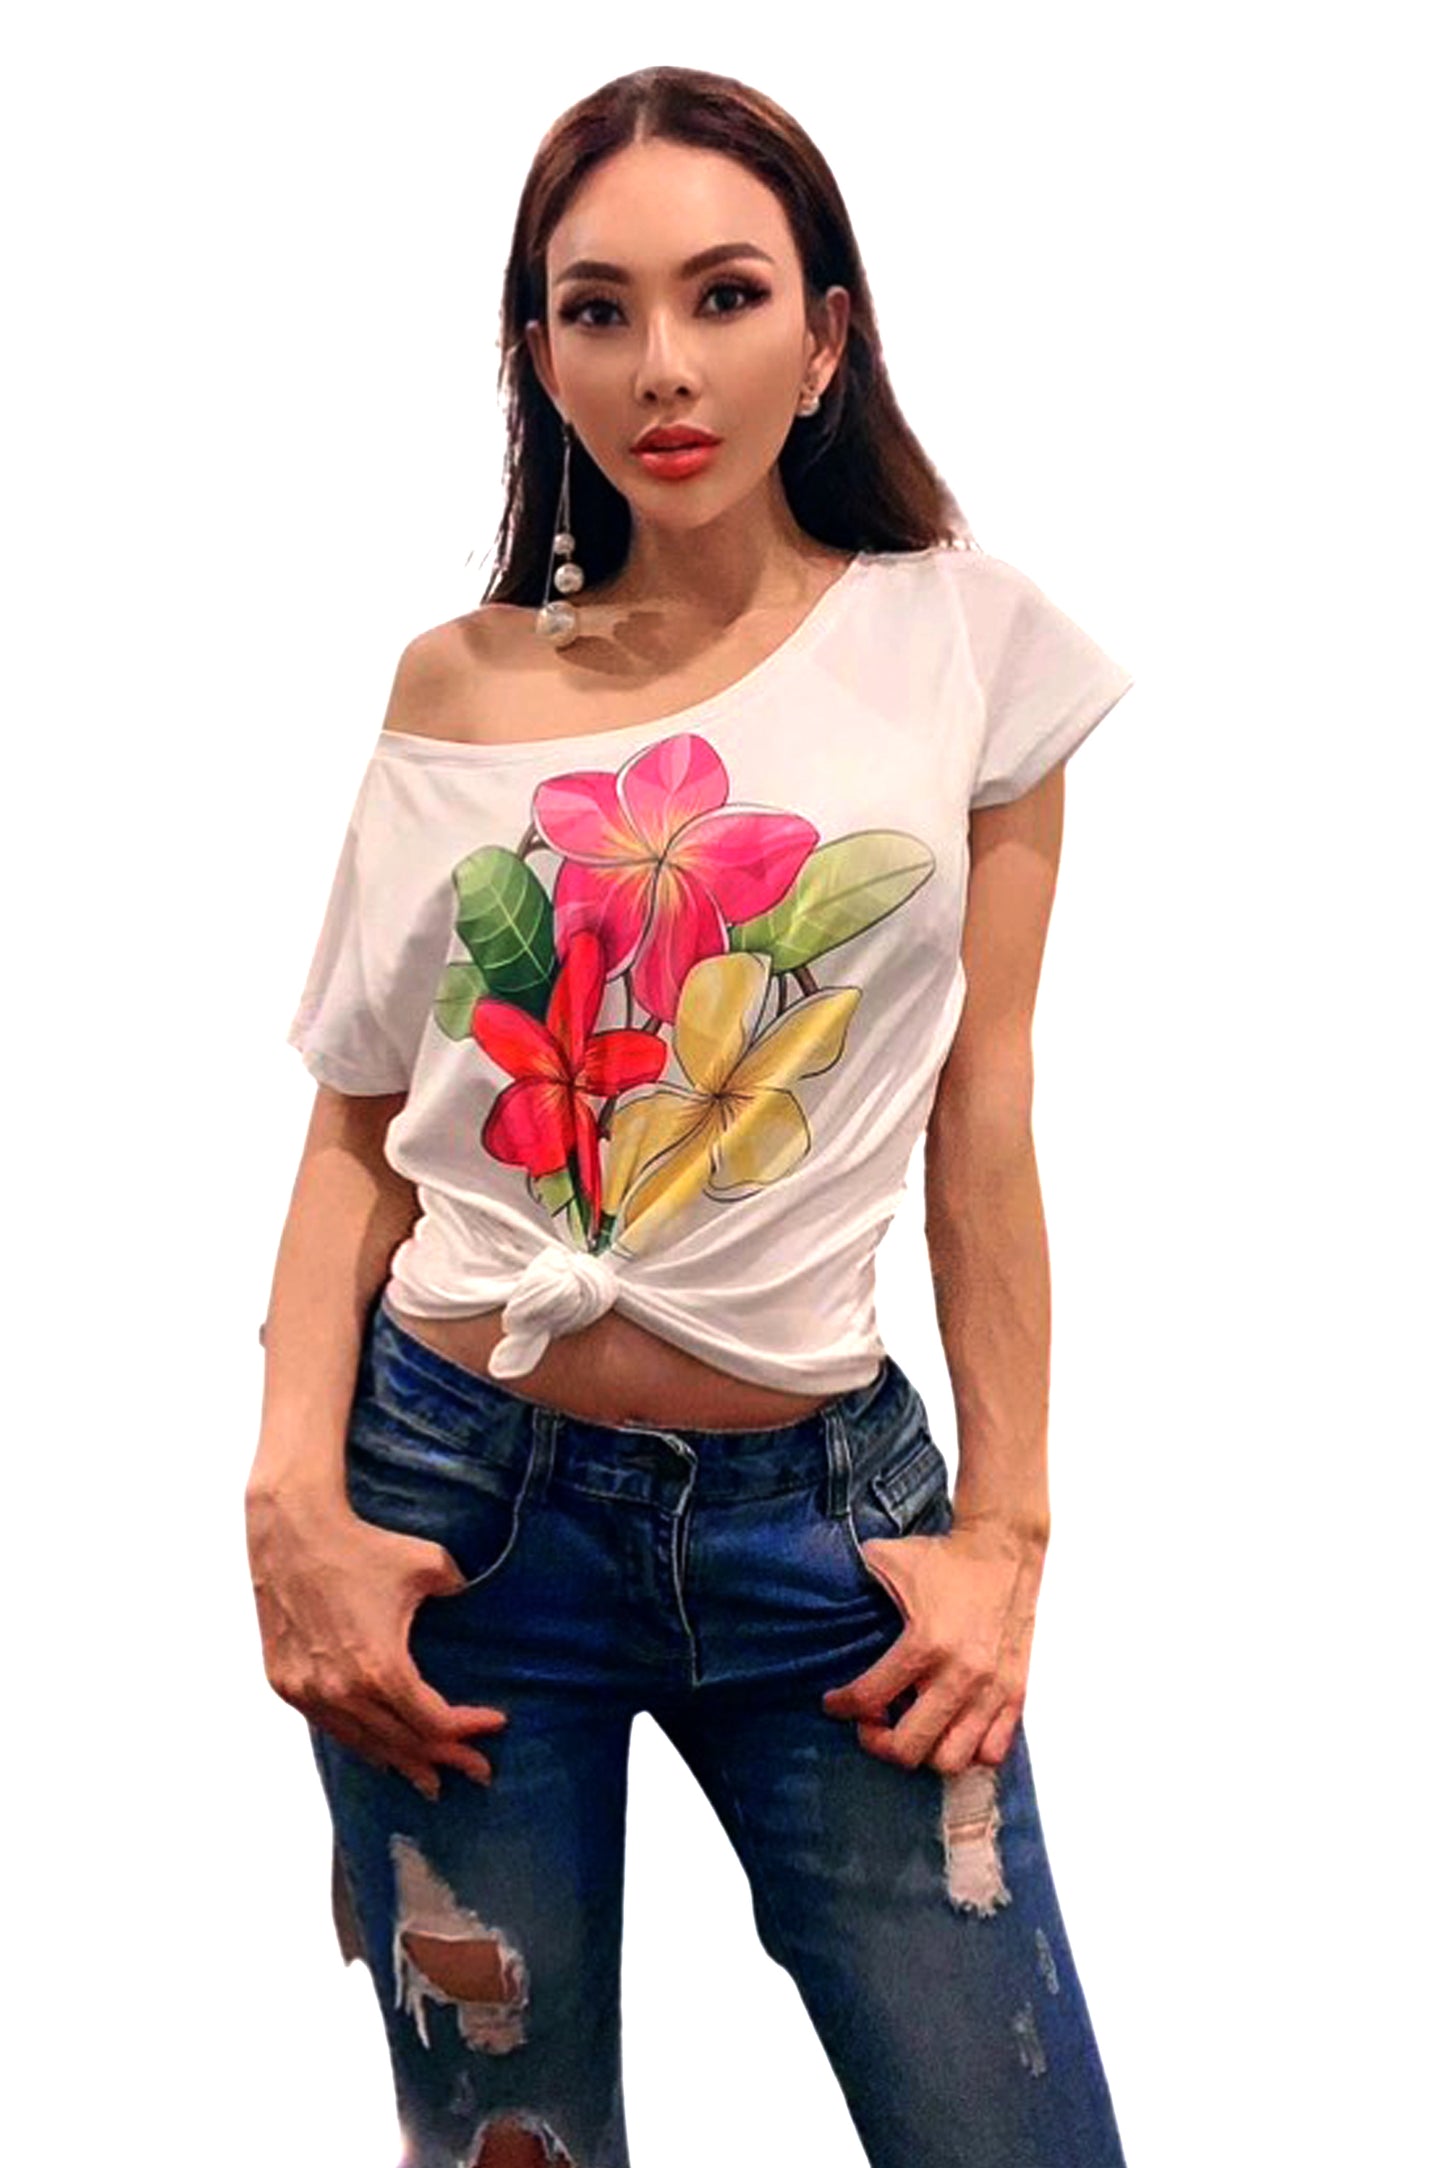 Sunne Tropical Women Top Tee White Loose Fit T-Shirt - Super Soft Light Weight Polyester Spandex - Hawaiian Plumeria